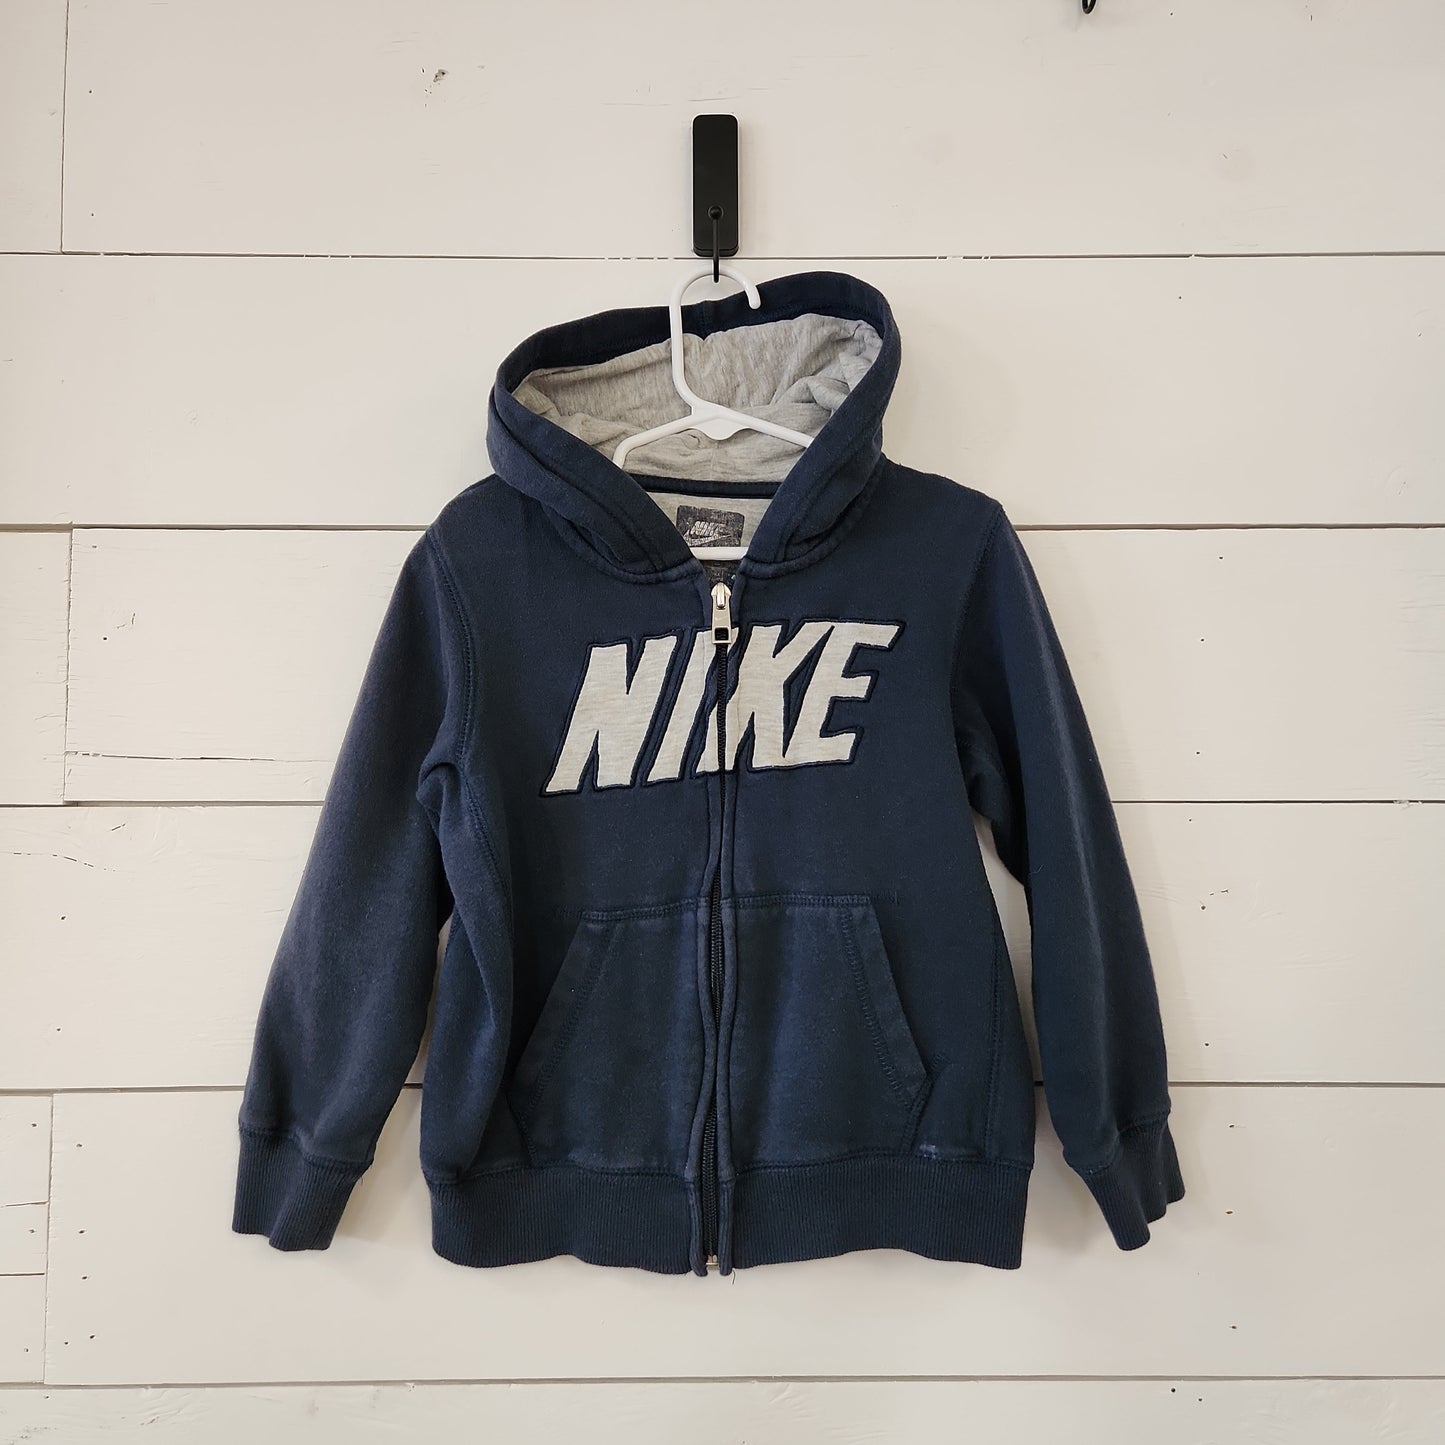 Size 4t | Nike Zip Hoodie | Secondhand